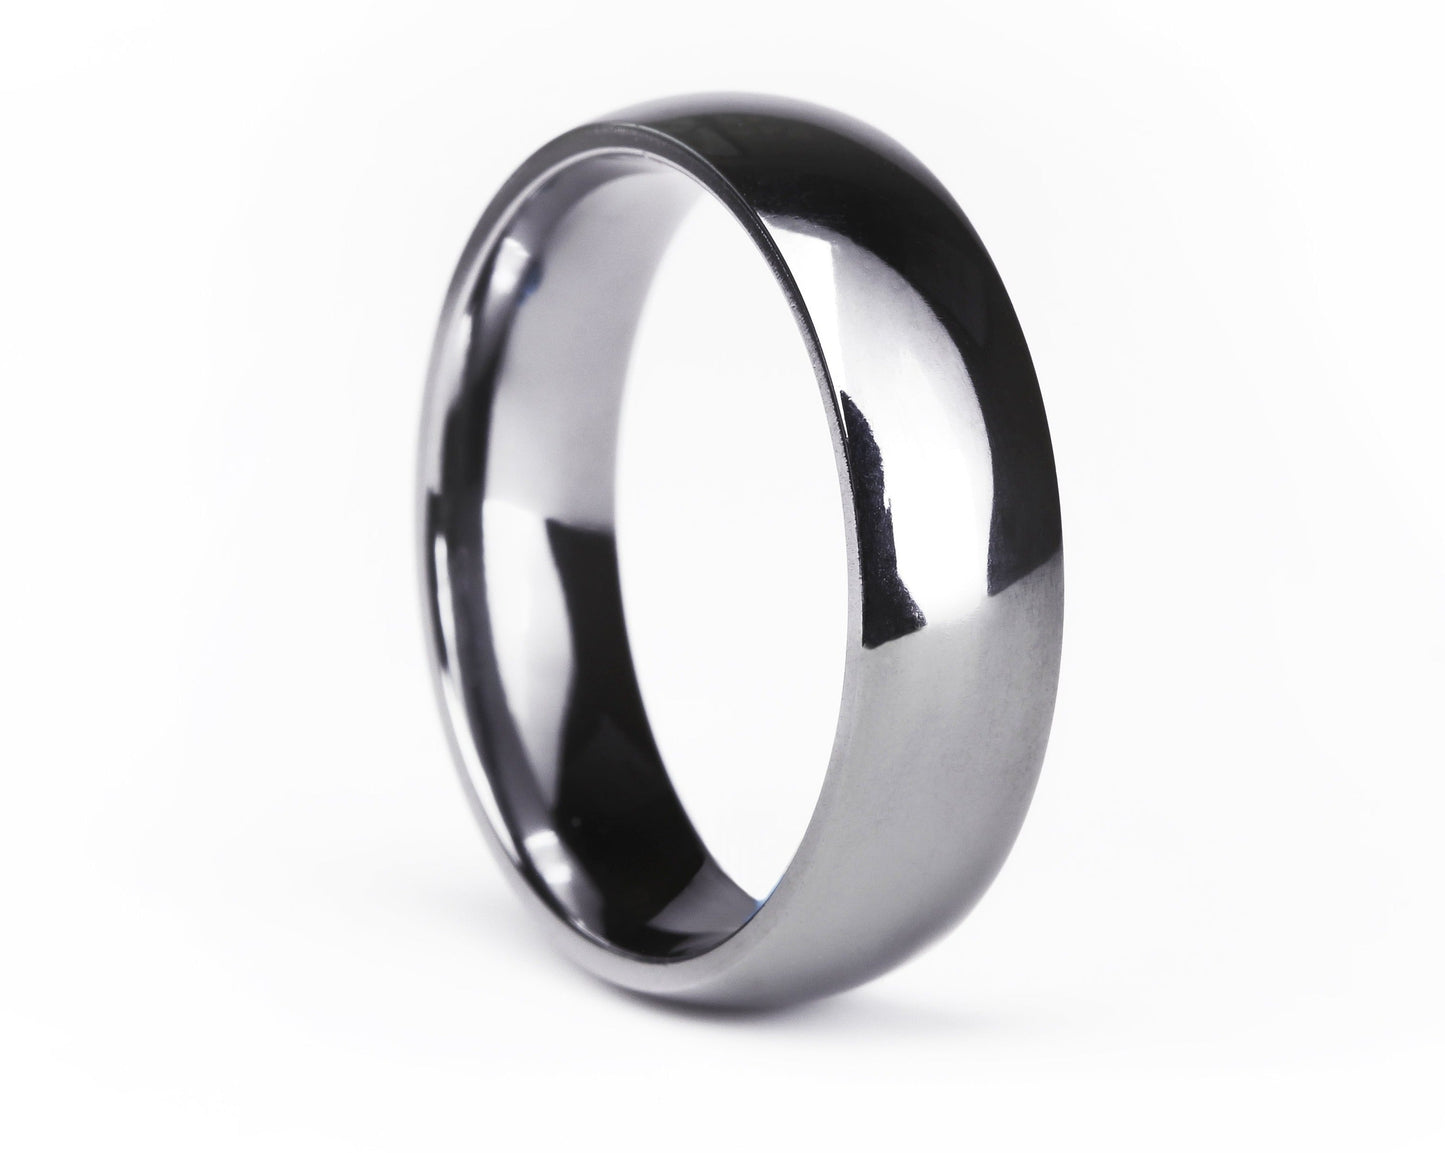 The Halford Tantalum Ring Rings 